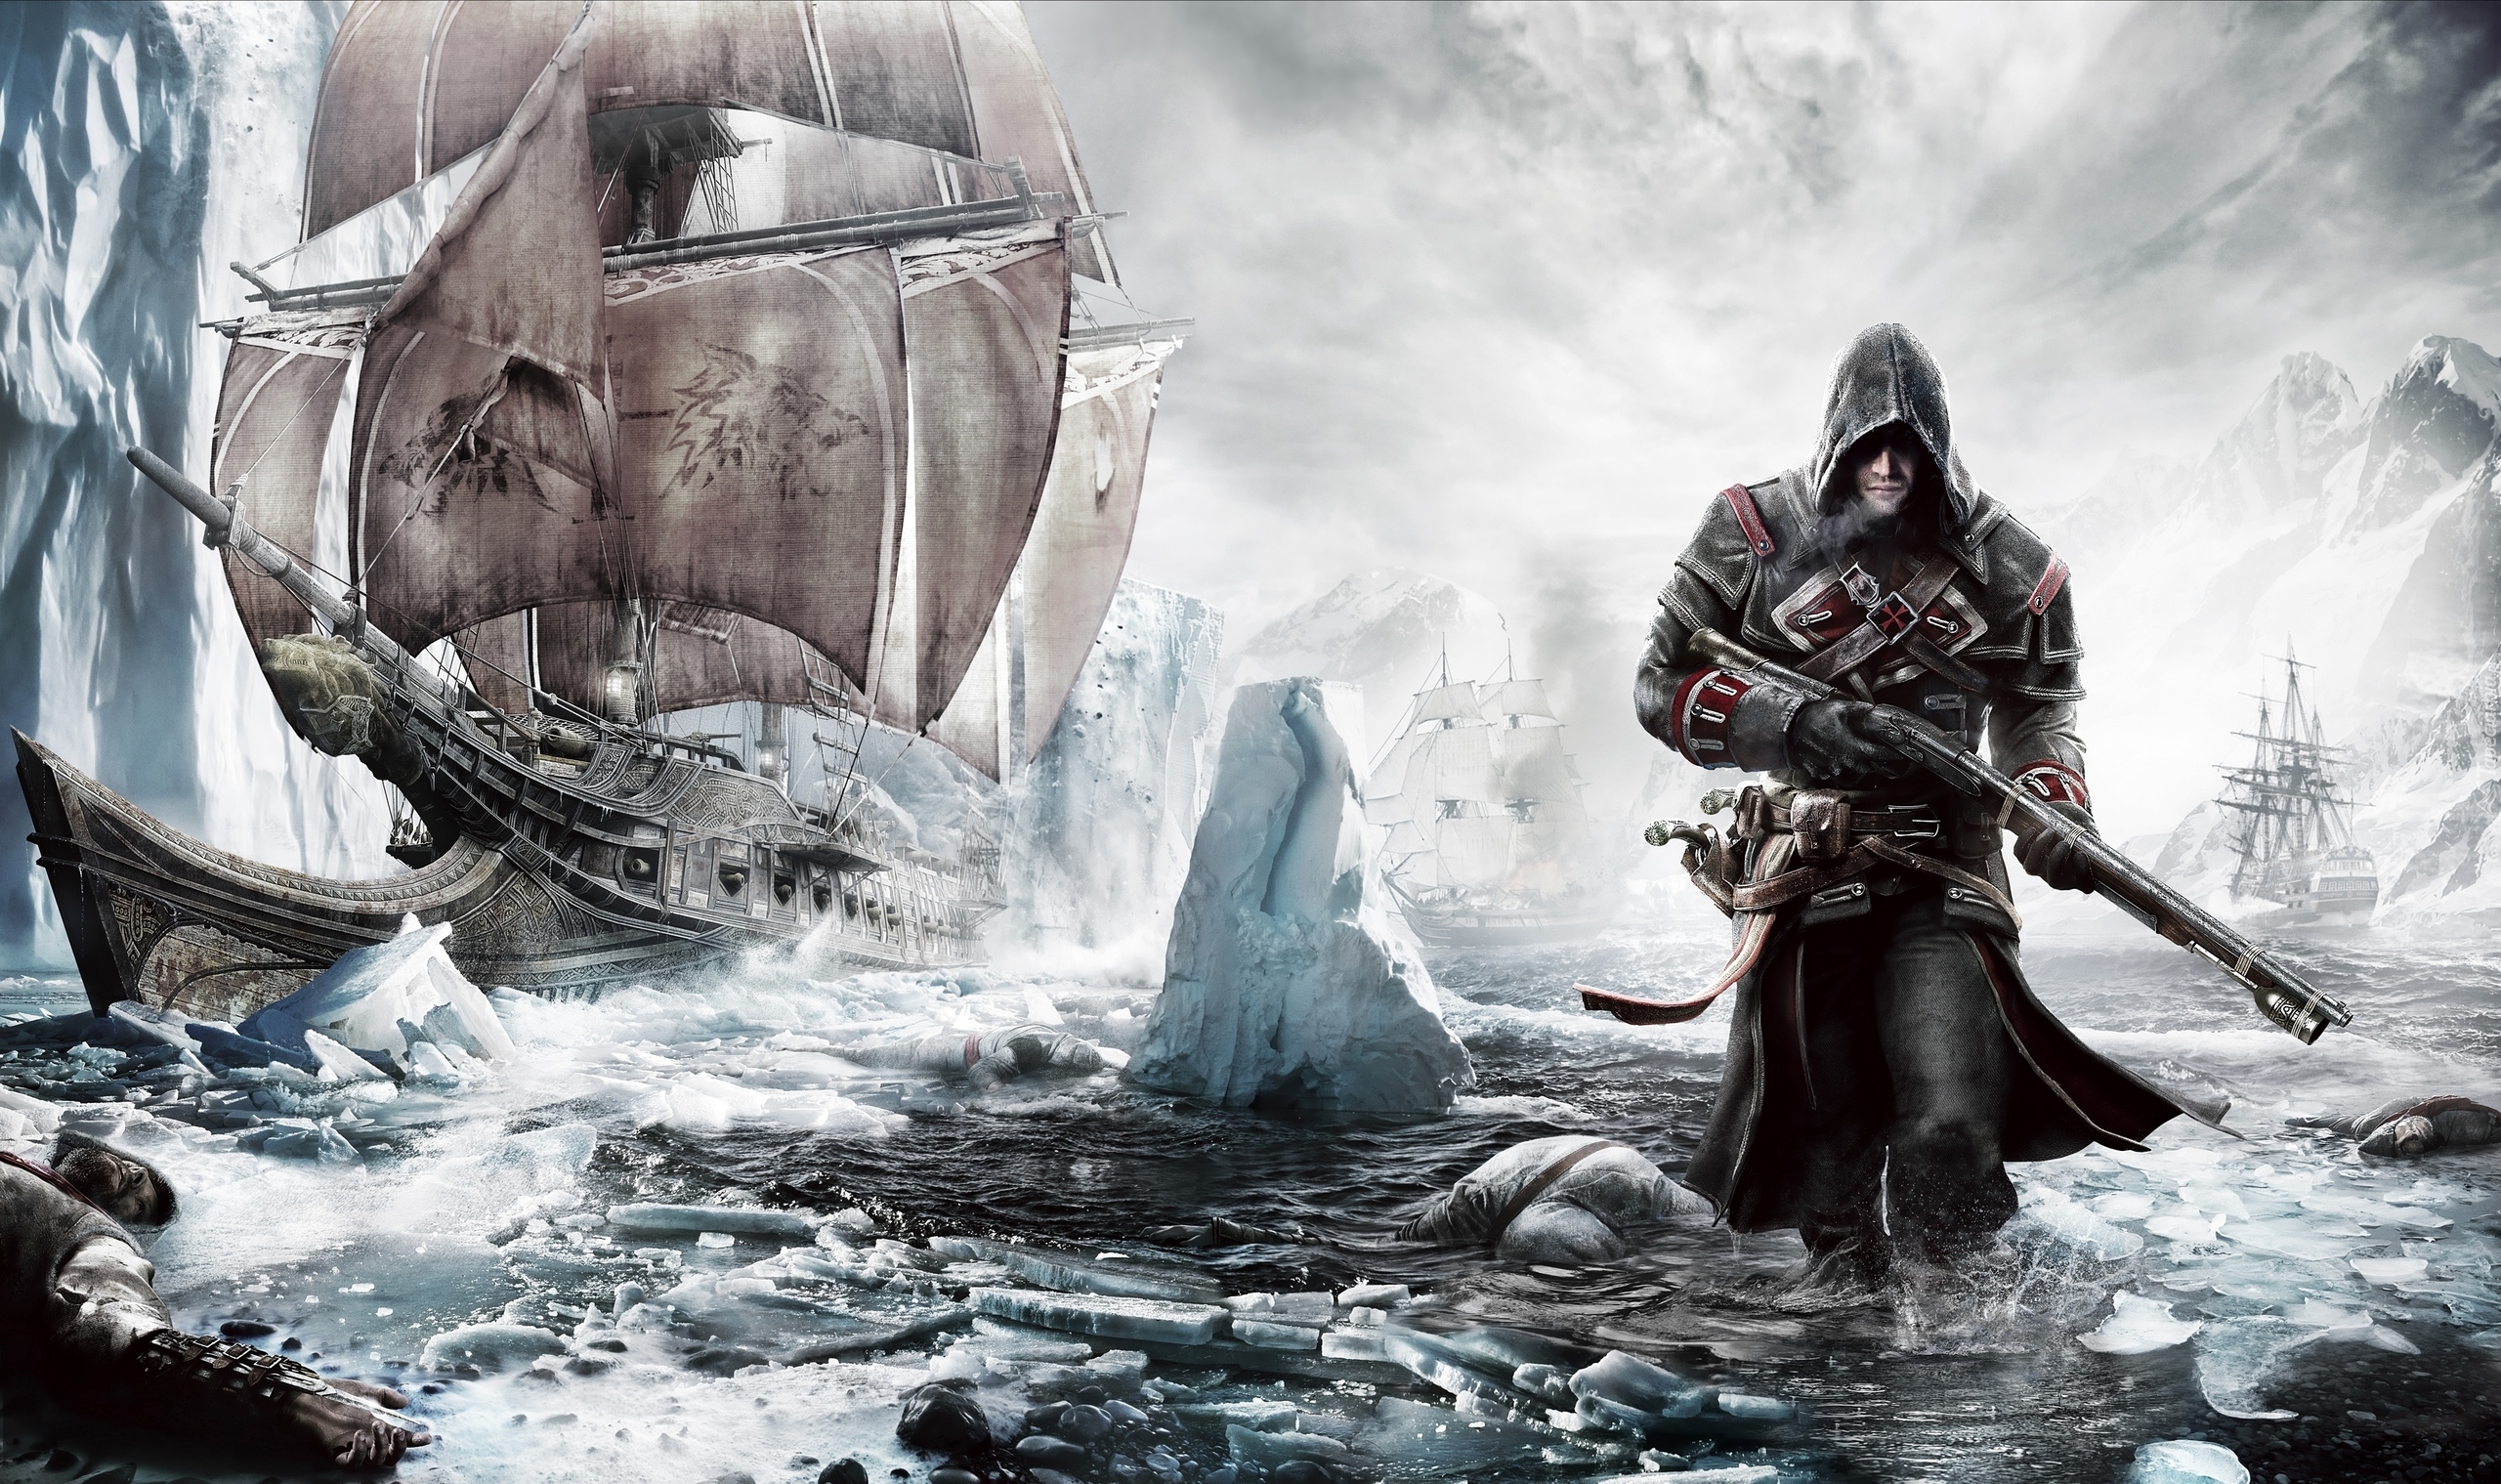 Assassins Creed Rogue, Shay Patrick Cormac, Okręt Morrigan, Góry lodowe